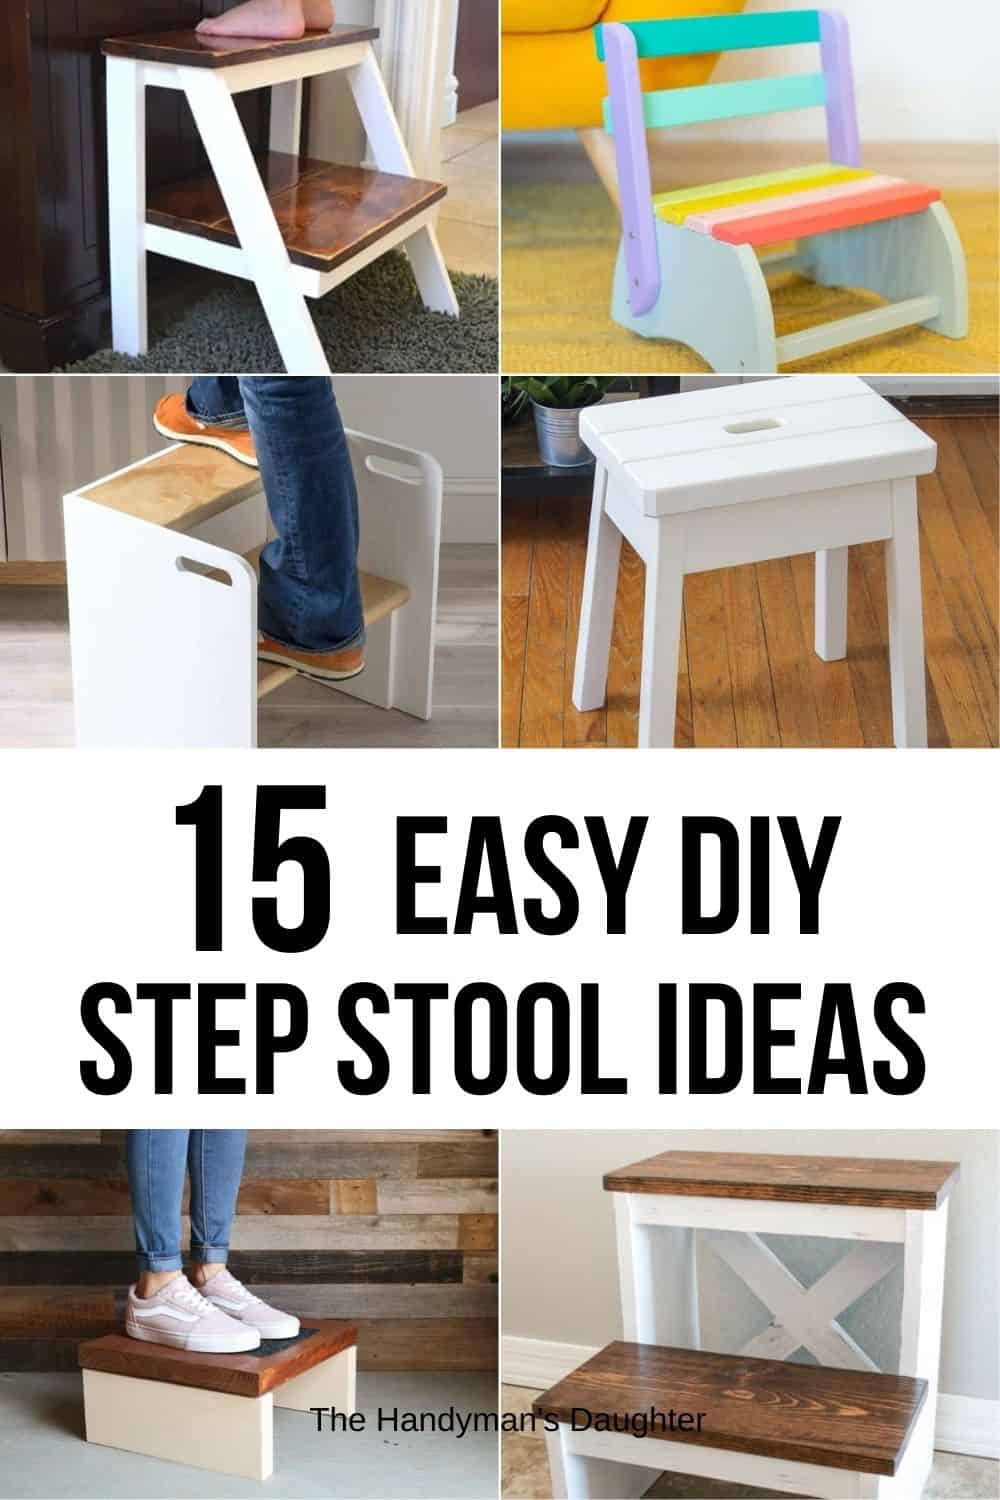 15 easy DIY step stool ideas